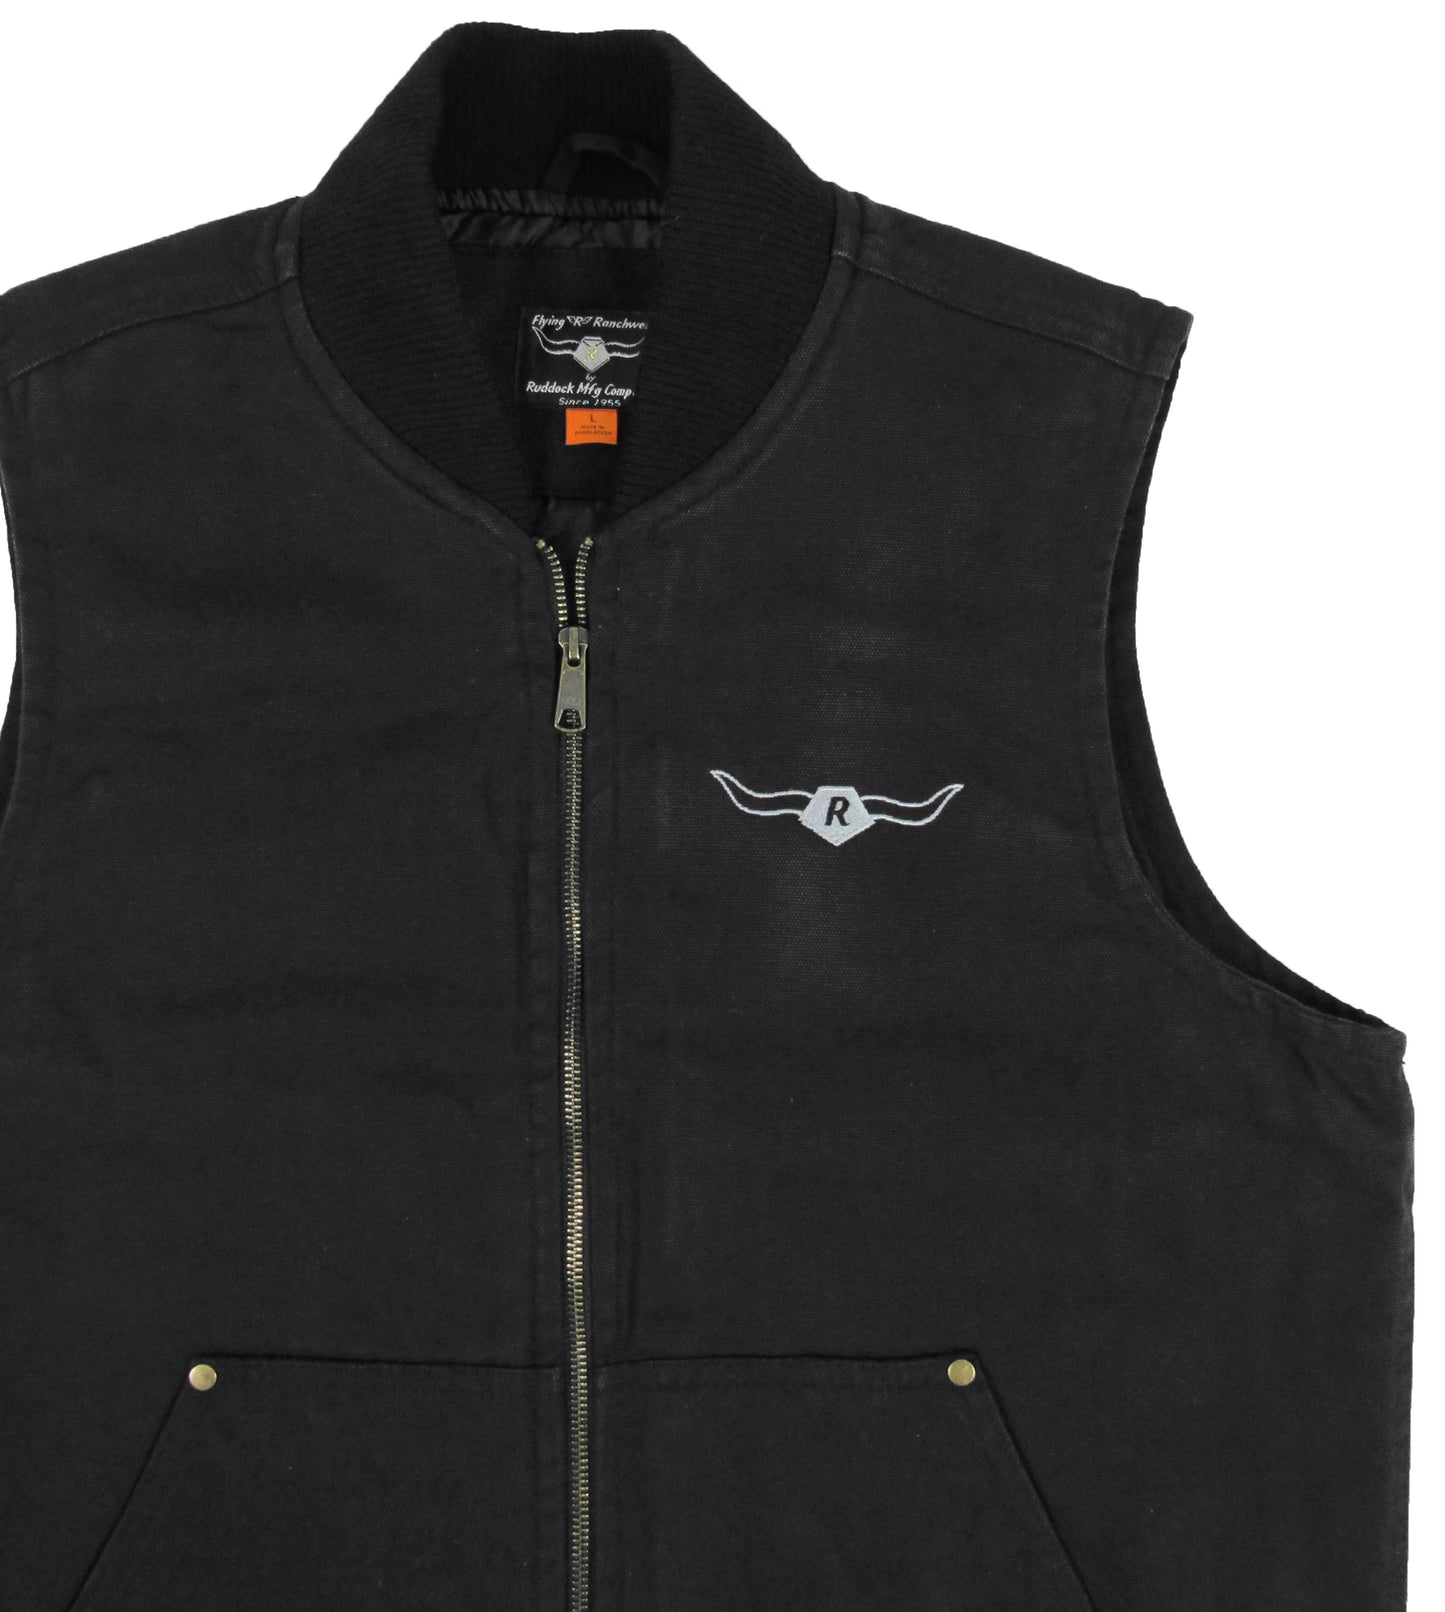 Prairie canvas vest in black by Flying R Ranchwear